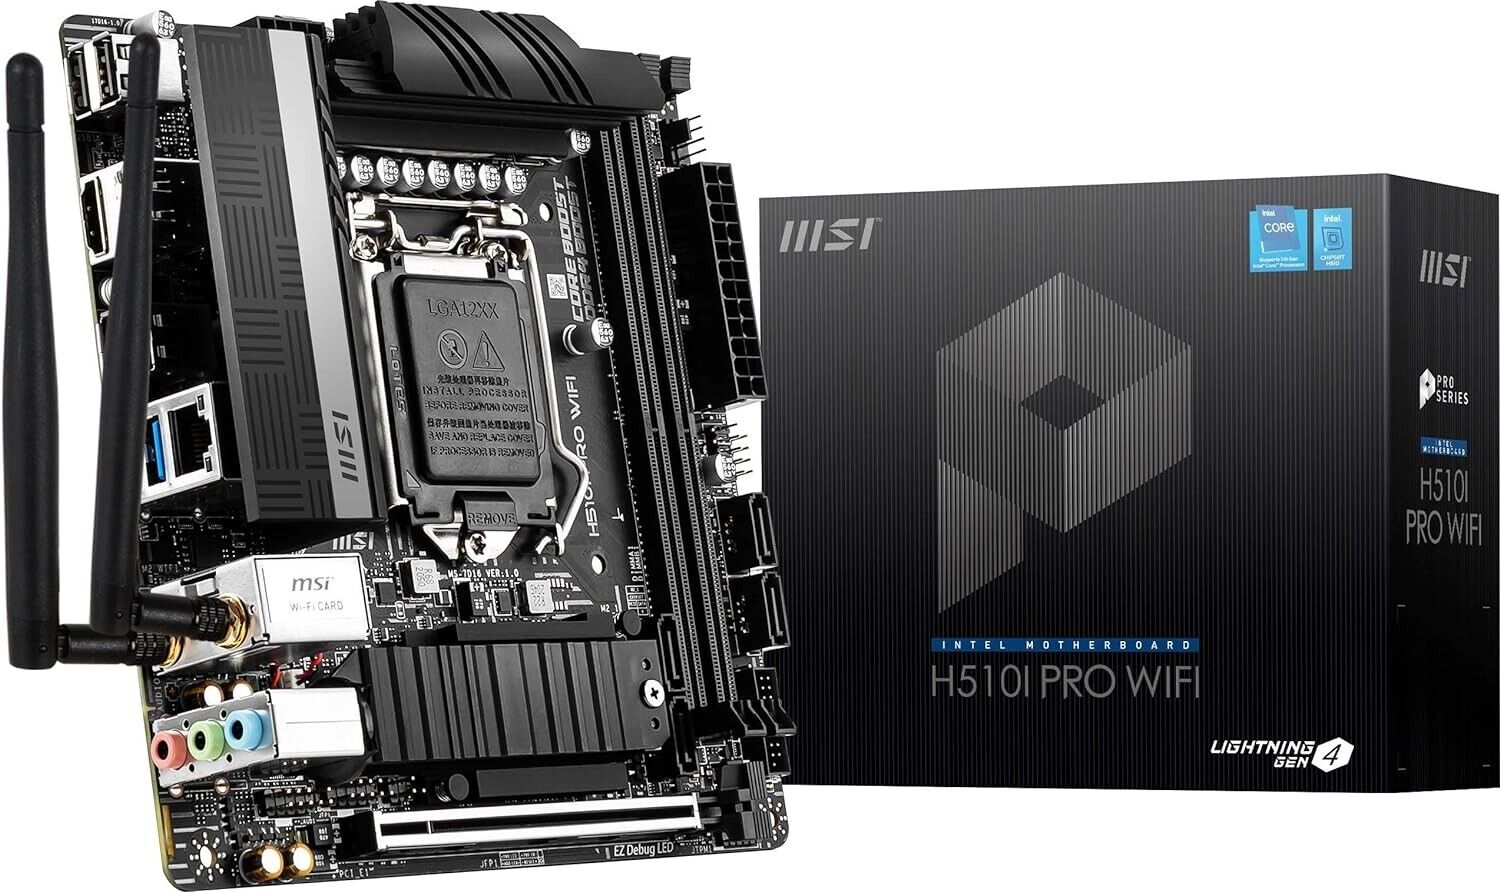 MSI H510I PRO WiFi ProSeries Intel Motherboard New Open Box